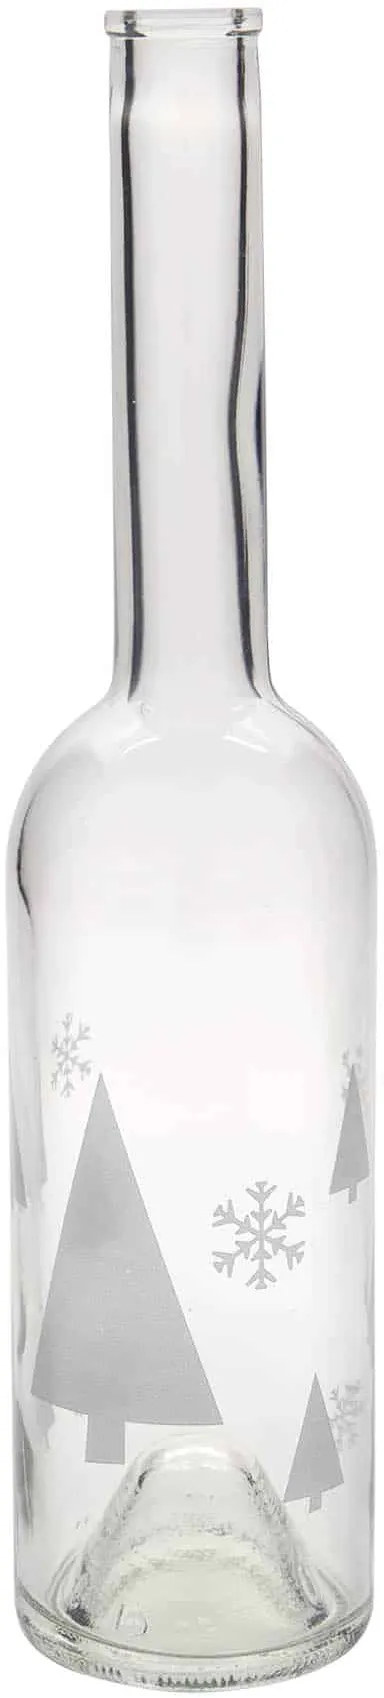 Glazen fles 'Opera', 500 ml, motief: Sneeuwvlokken, monding: kurk